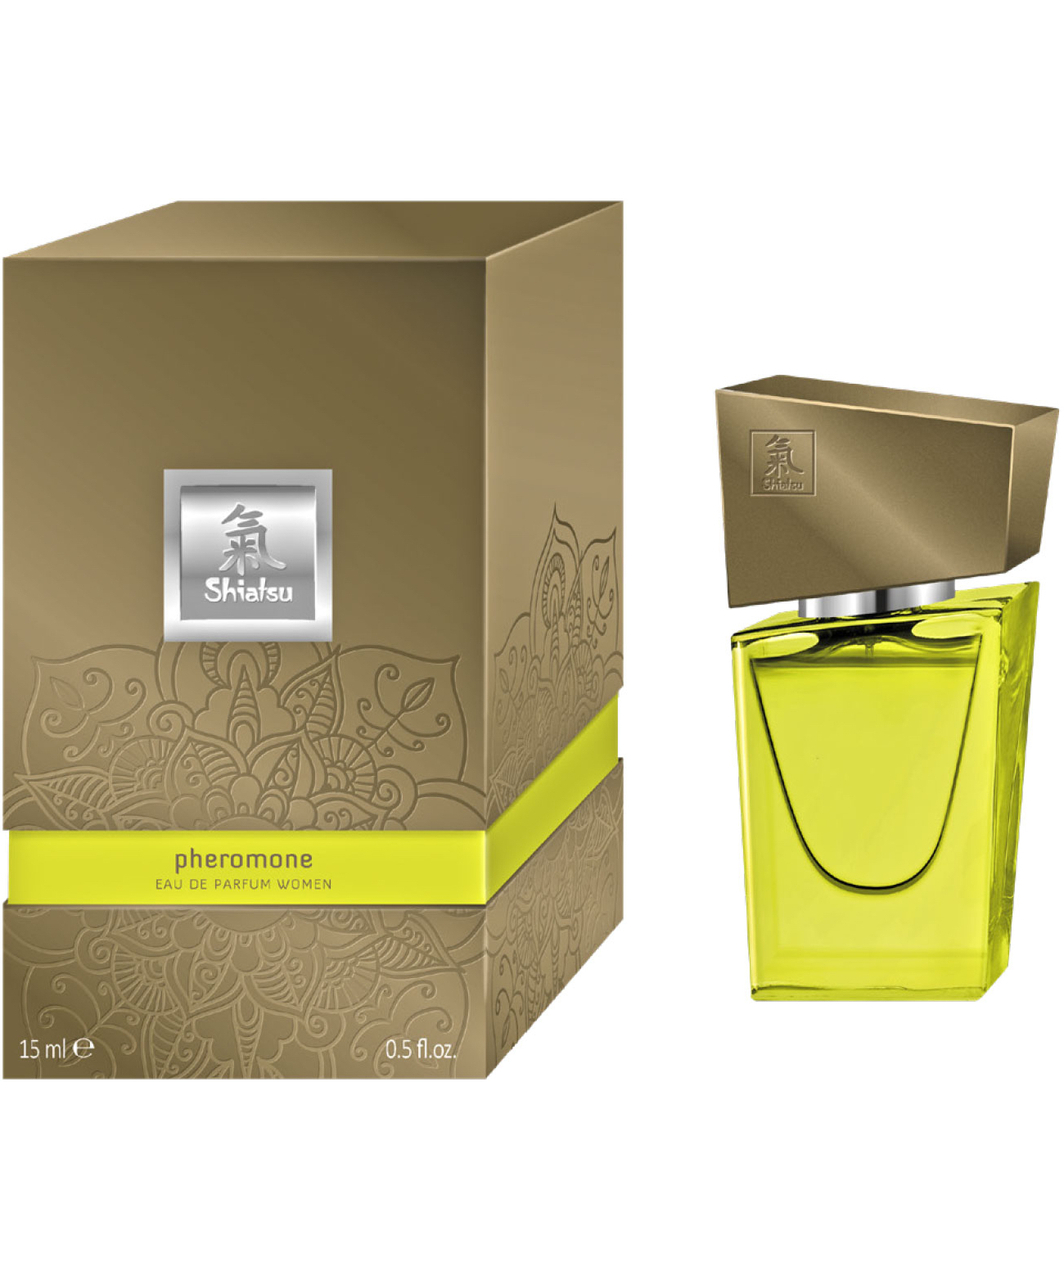 Shiatsu Pheromone Eau de Parfum Women (15 ml)